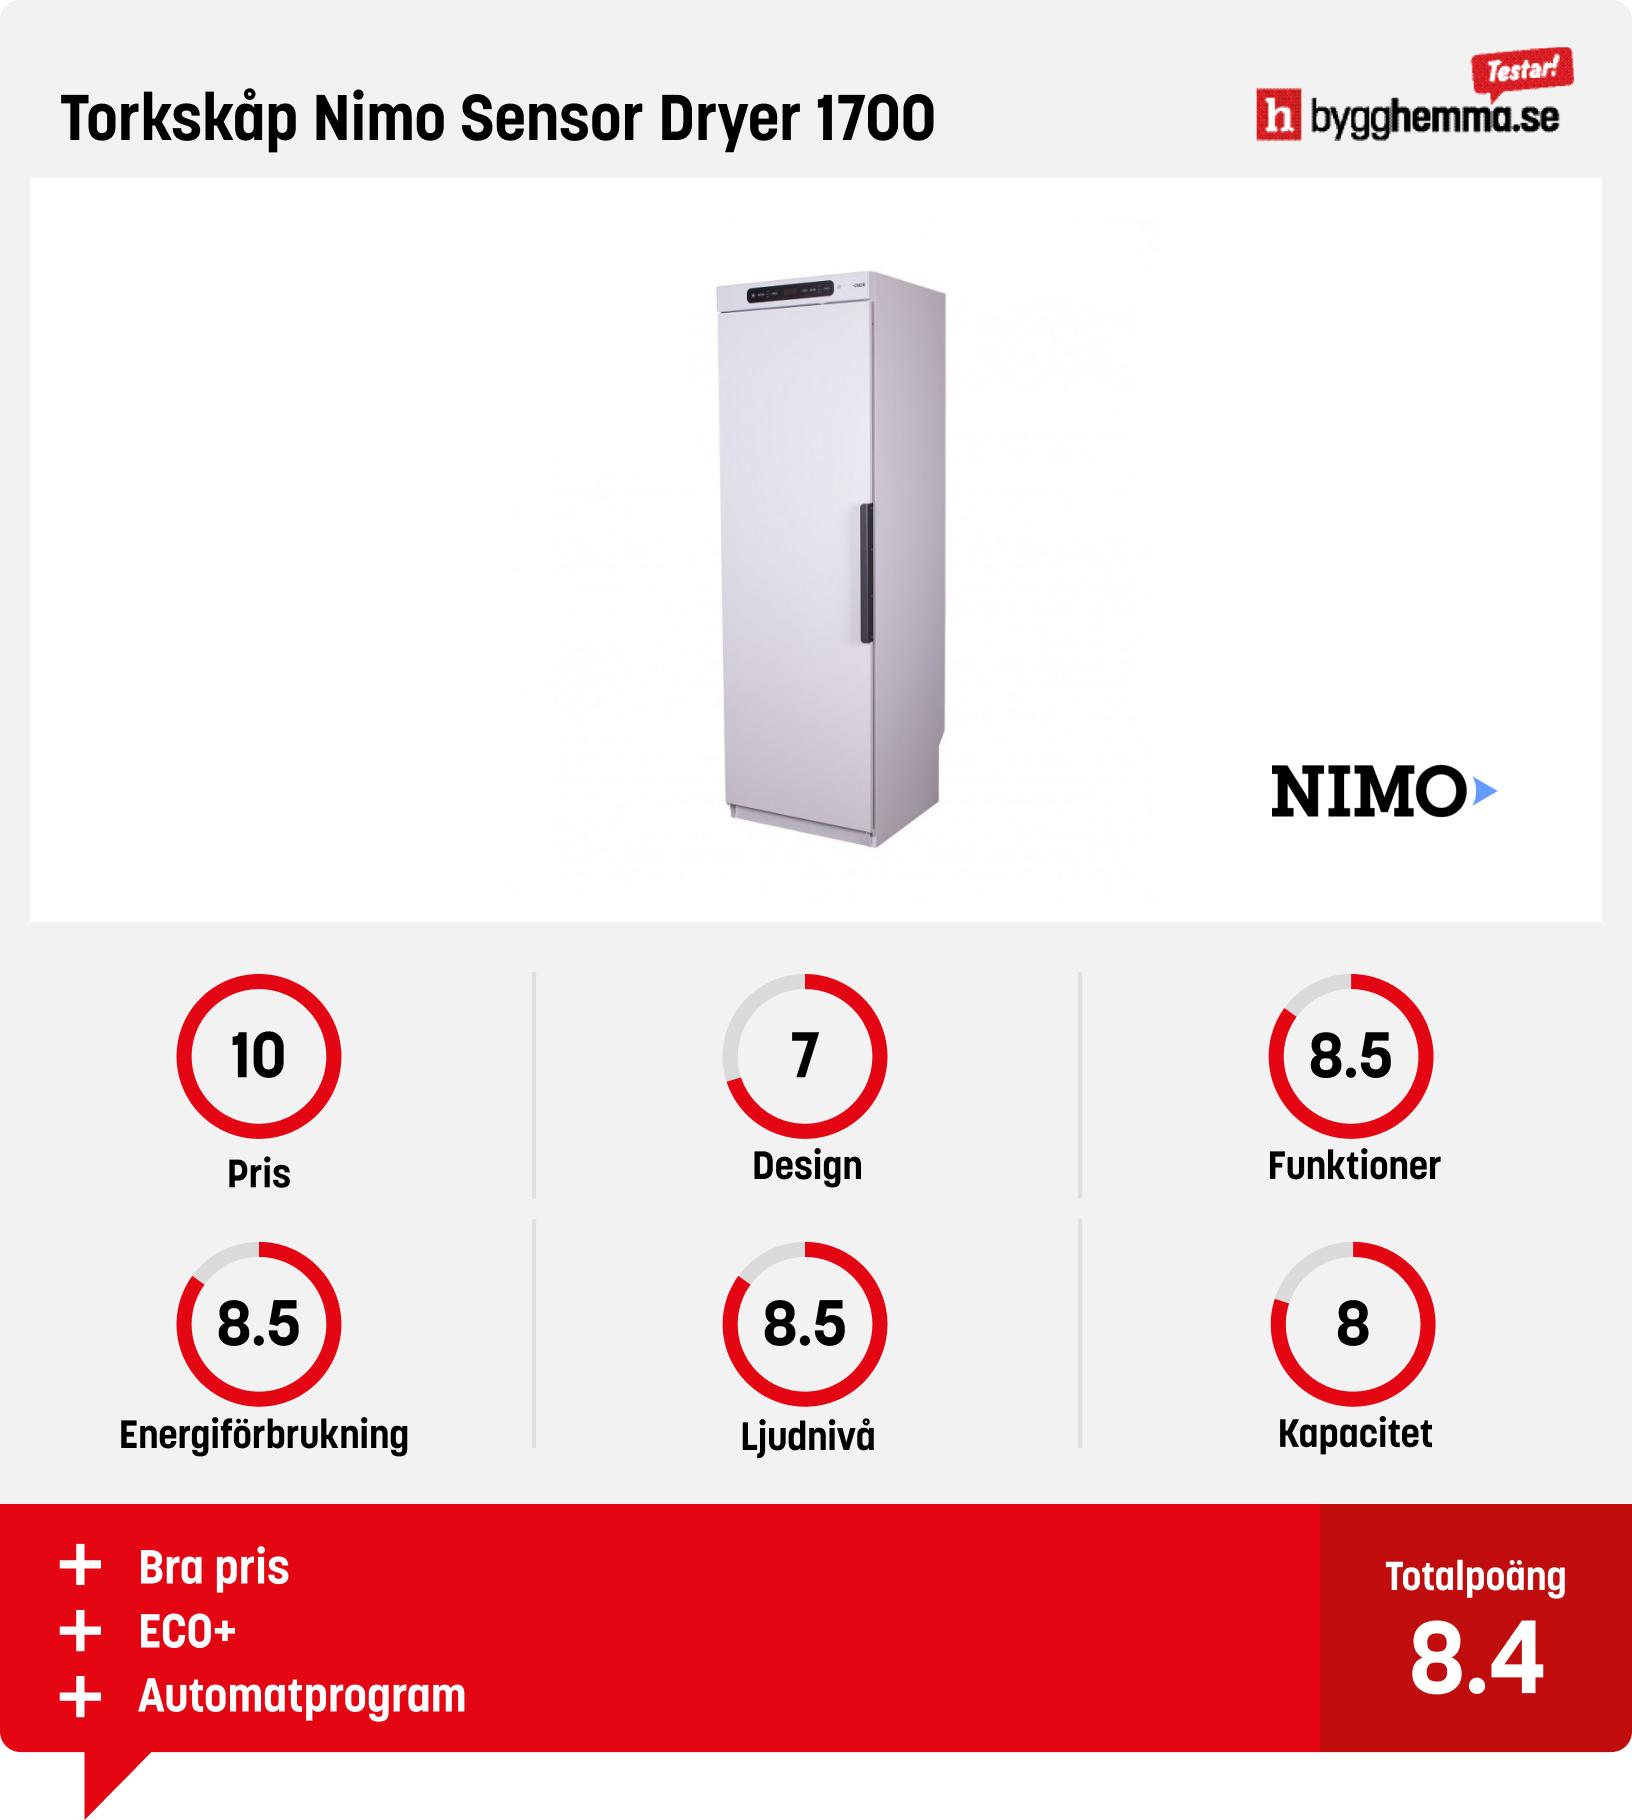 Torkskåp bäst i test - Torkskåp Nimo Sensor Dryer 1700